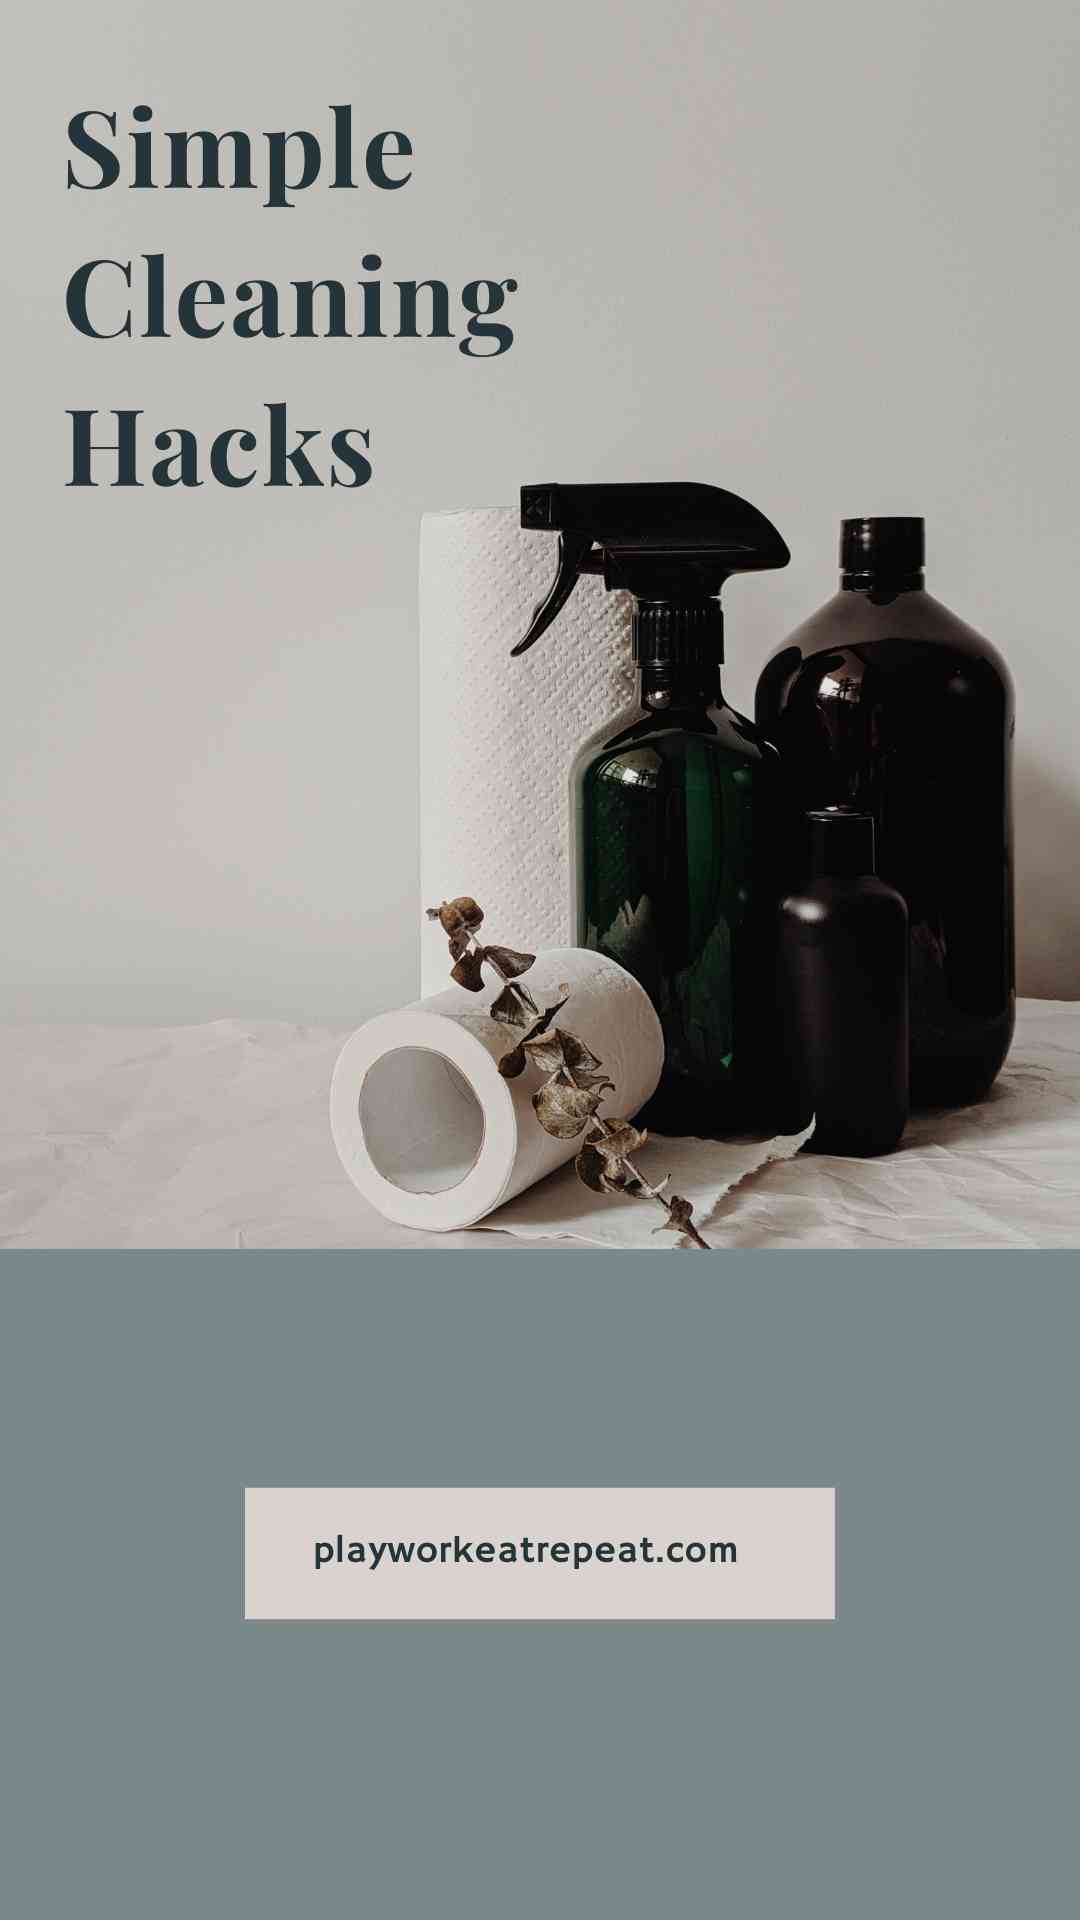 Simple Cleaning Hacks - PLAYWORKEATREPEAT